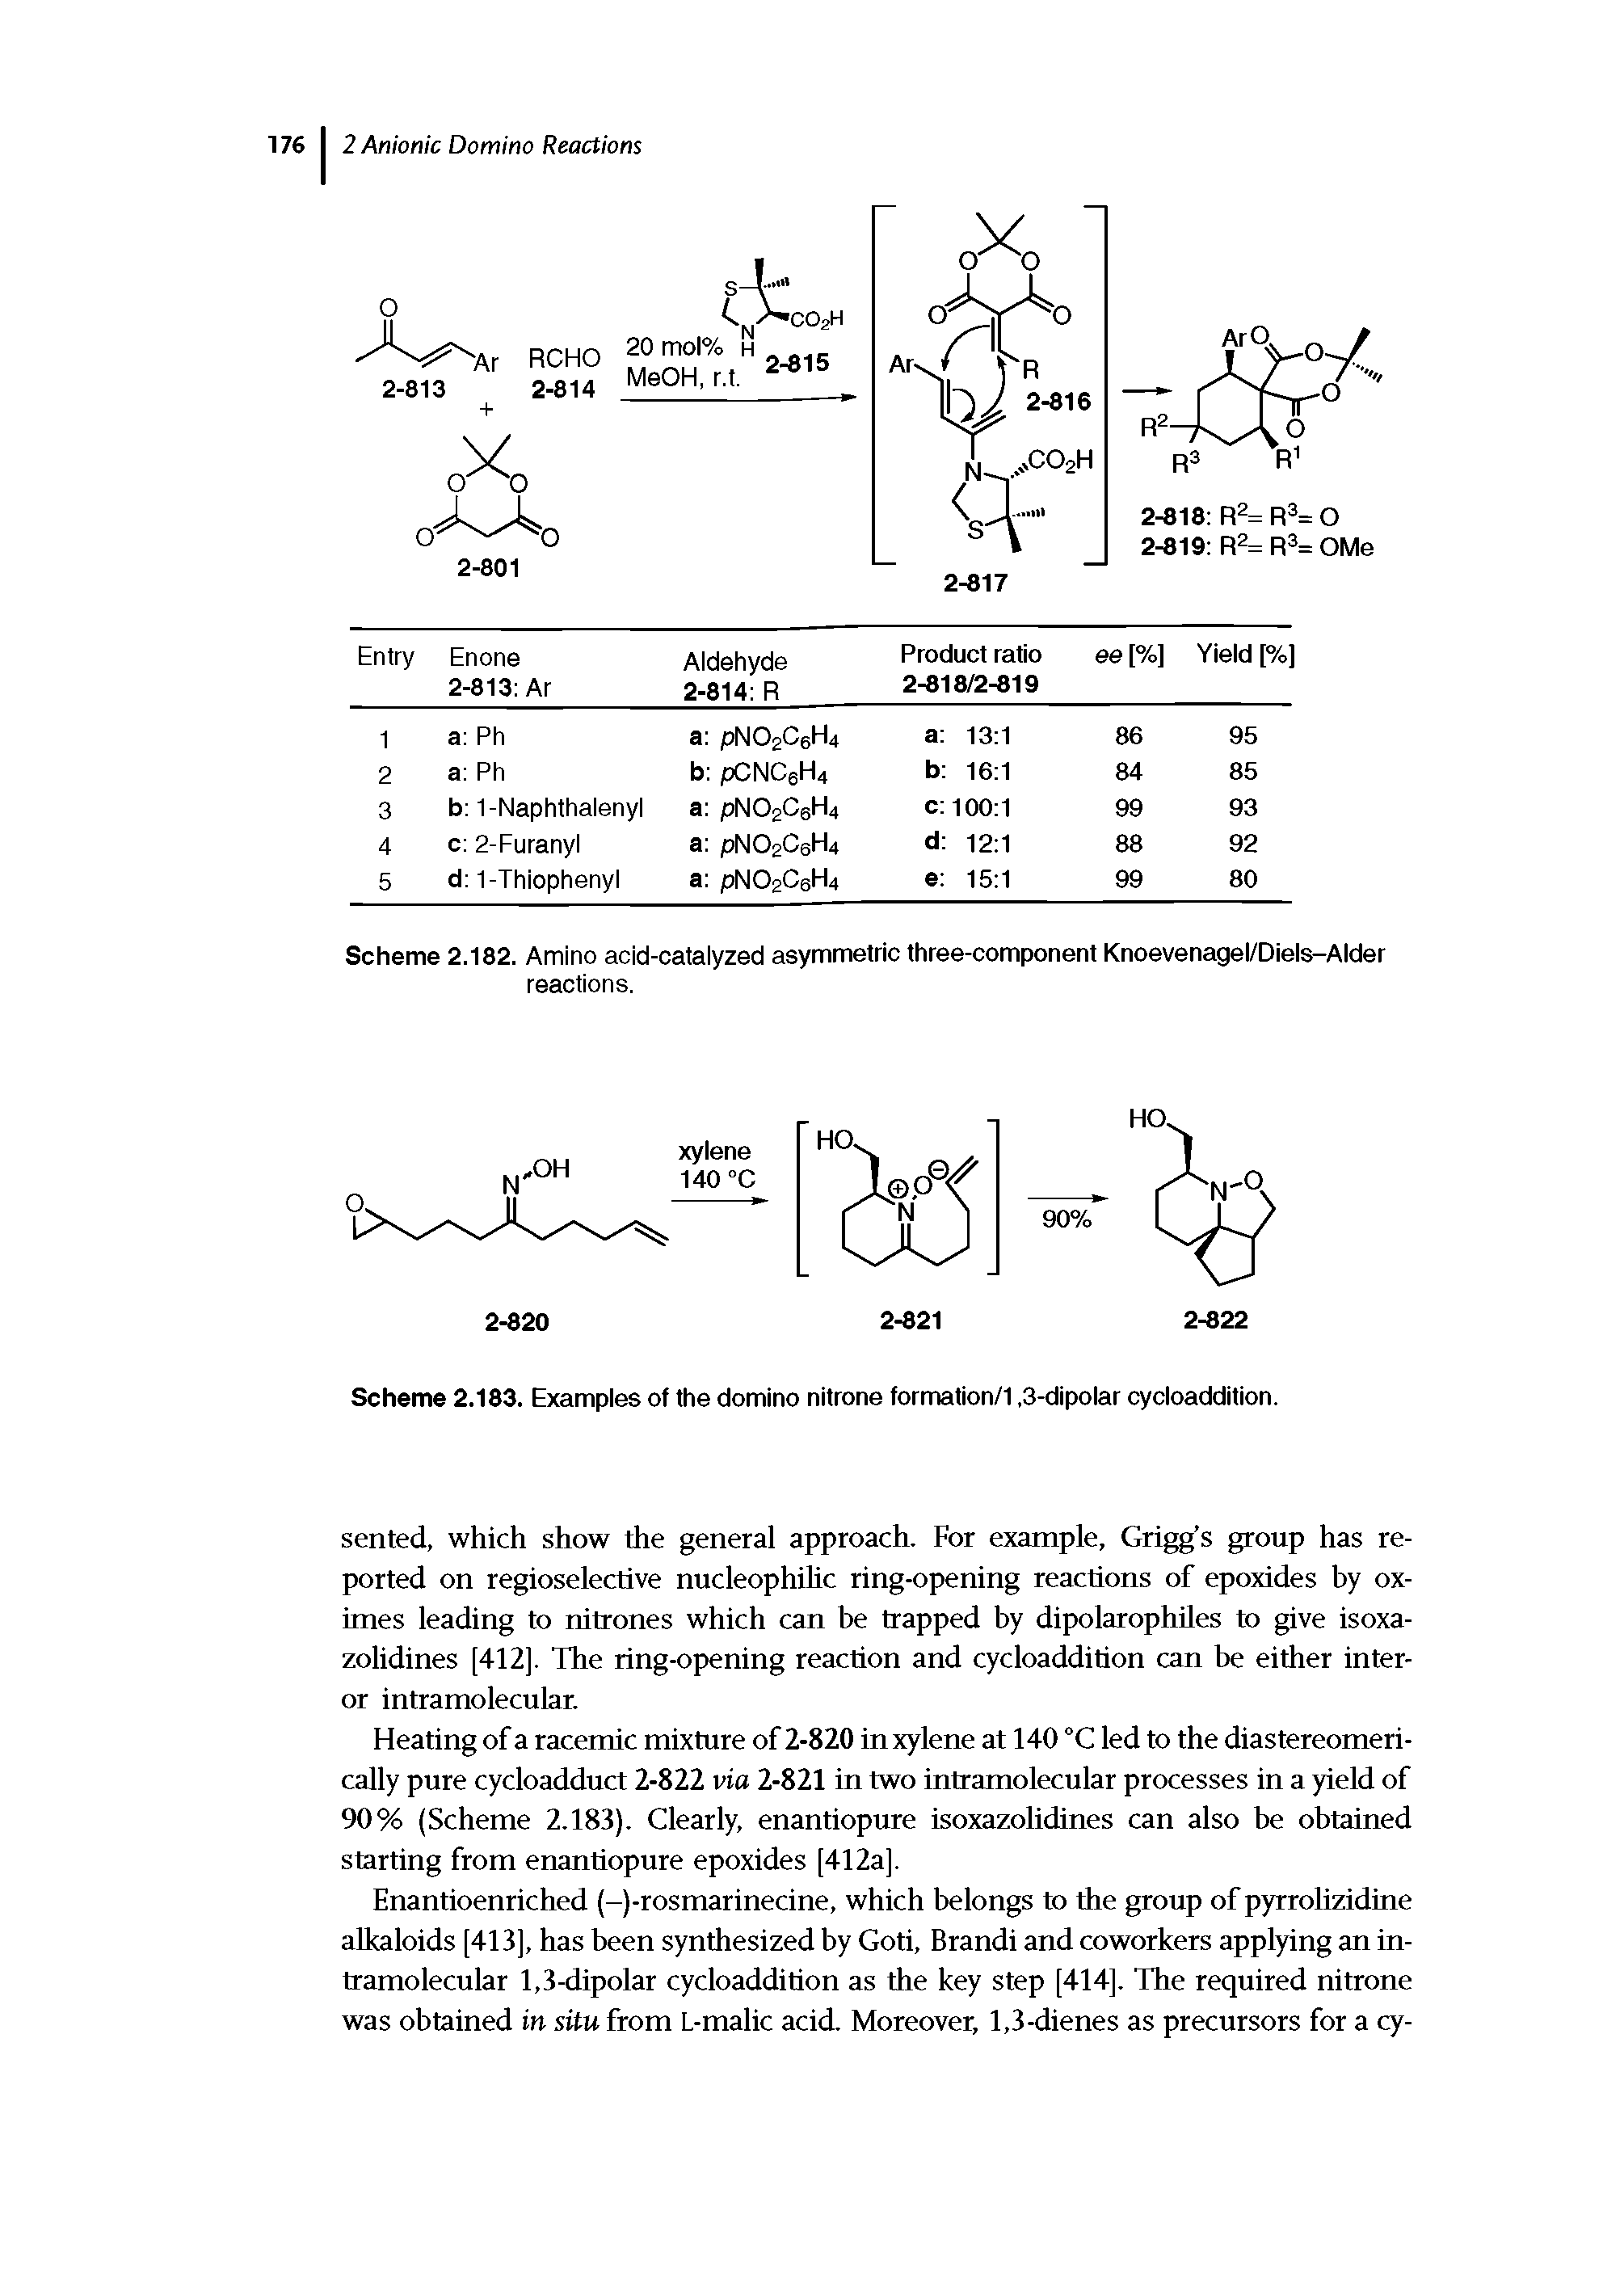 Scheme 2.182. Amino acid-catalyzed asymmetric three-component Knoevenagel/Diels-Alder reactions.